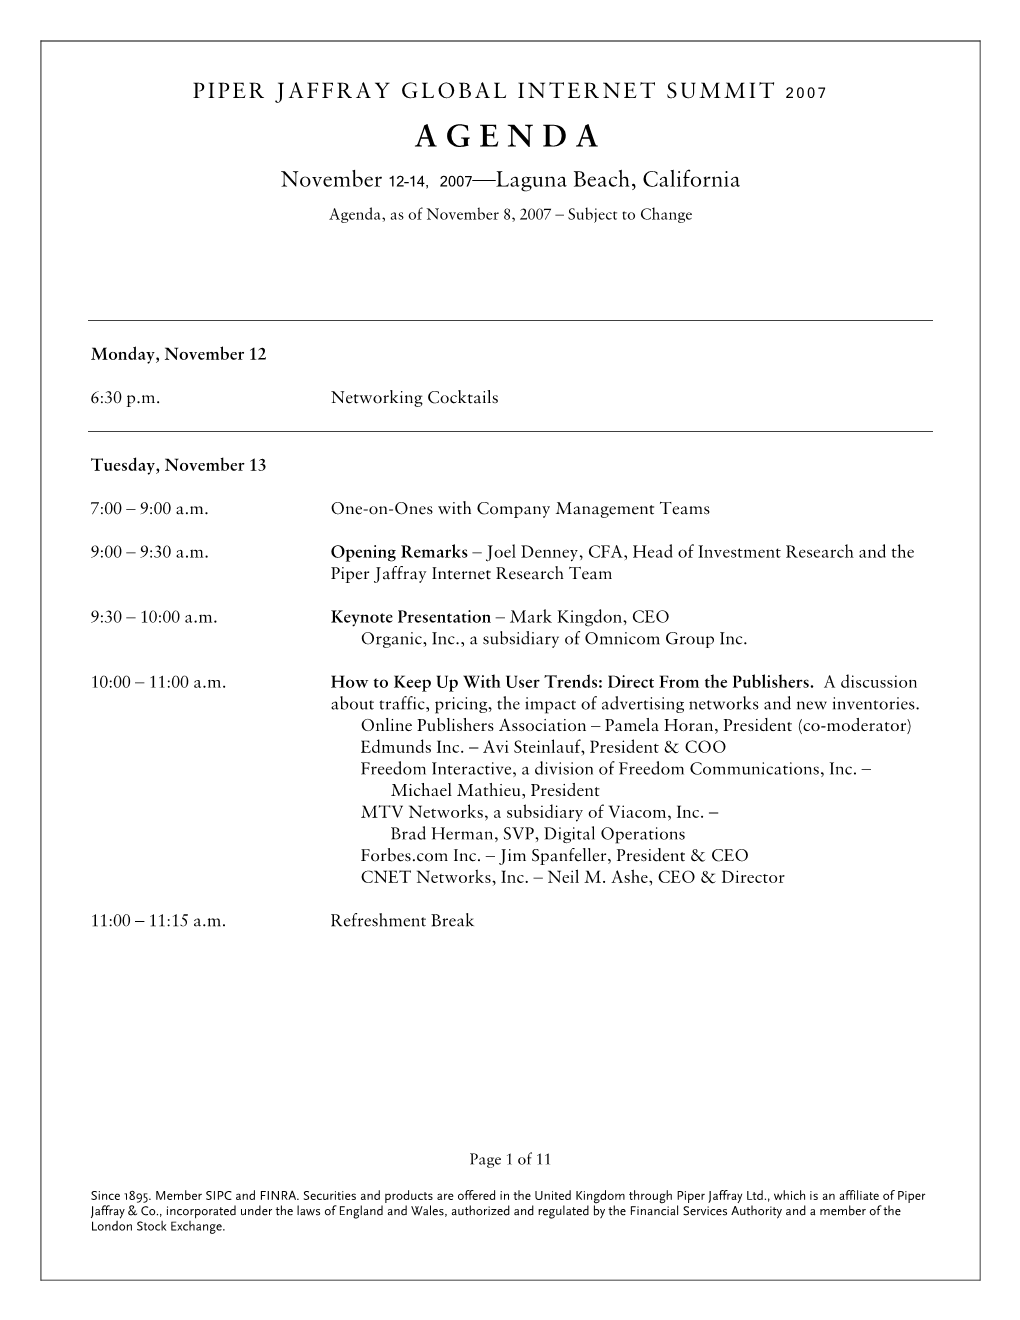 AGENDA November 12–14, 2007—Laguna Beach, California Agenda, As of November 8, 2007 – Subject to Change